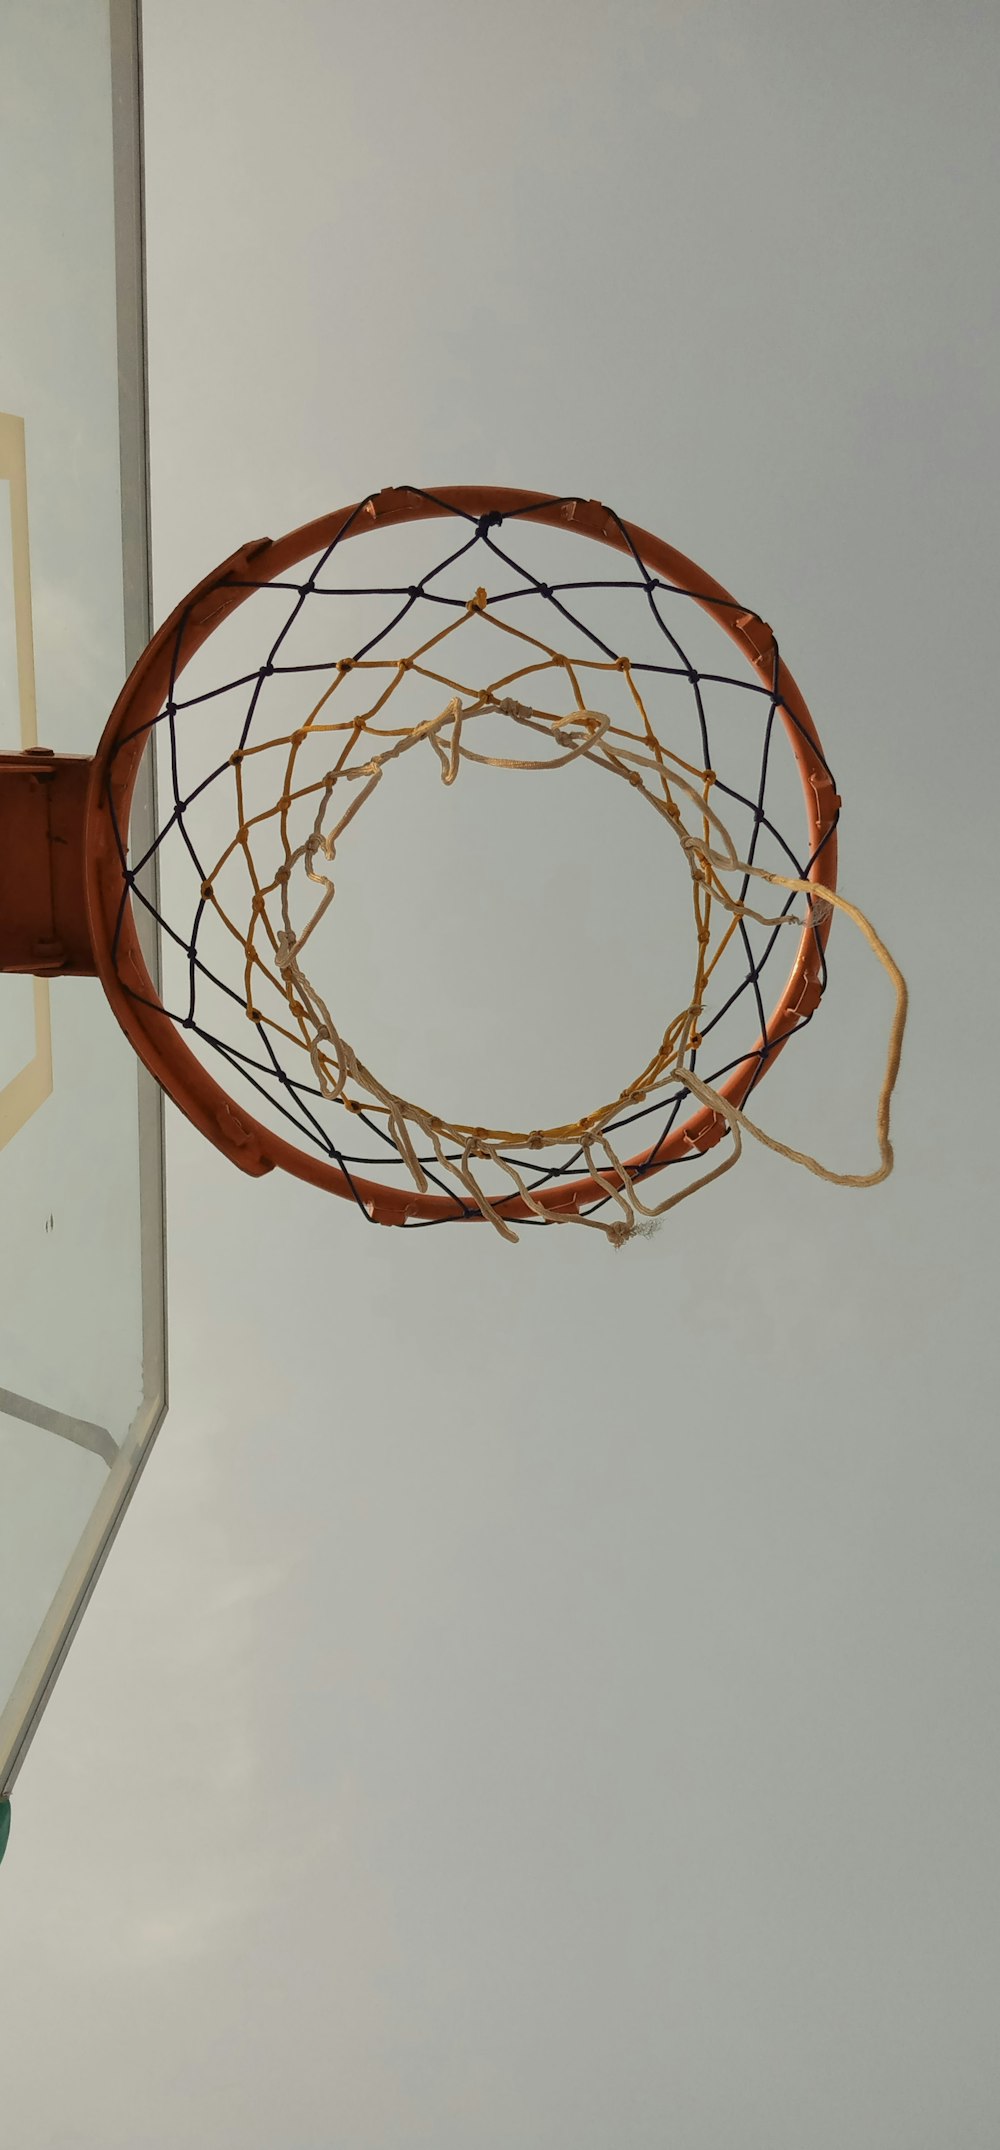 brown and white basketball hoop